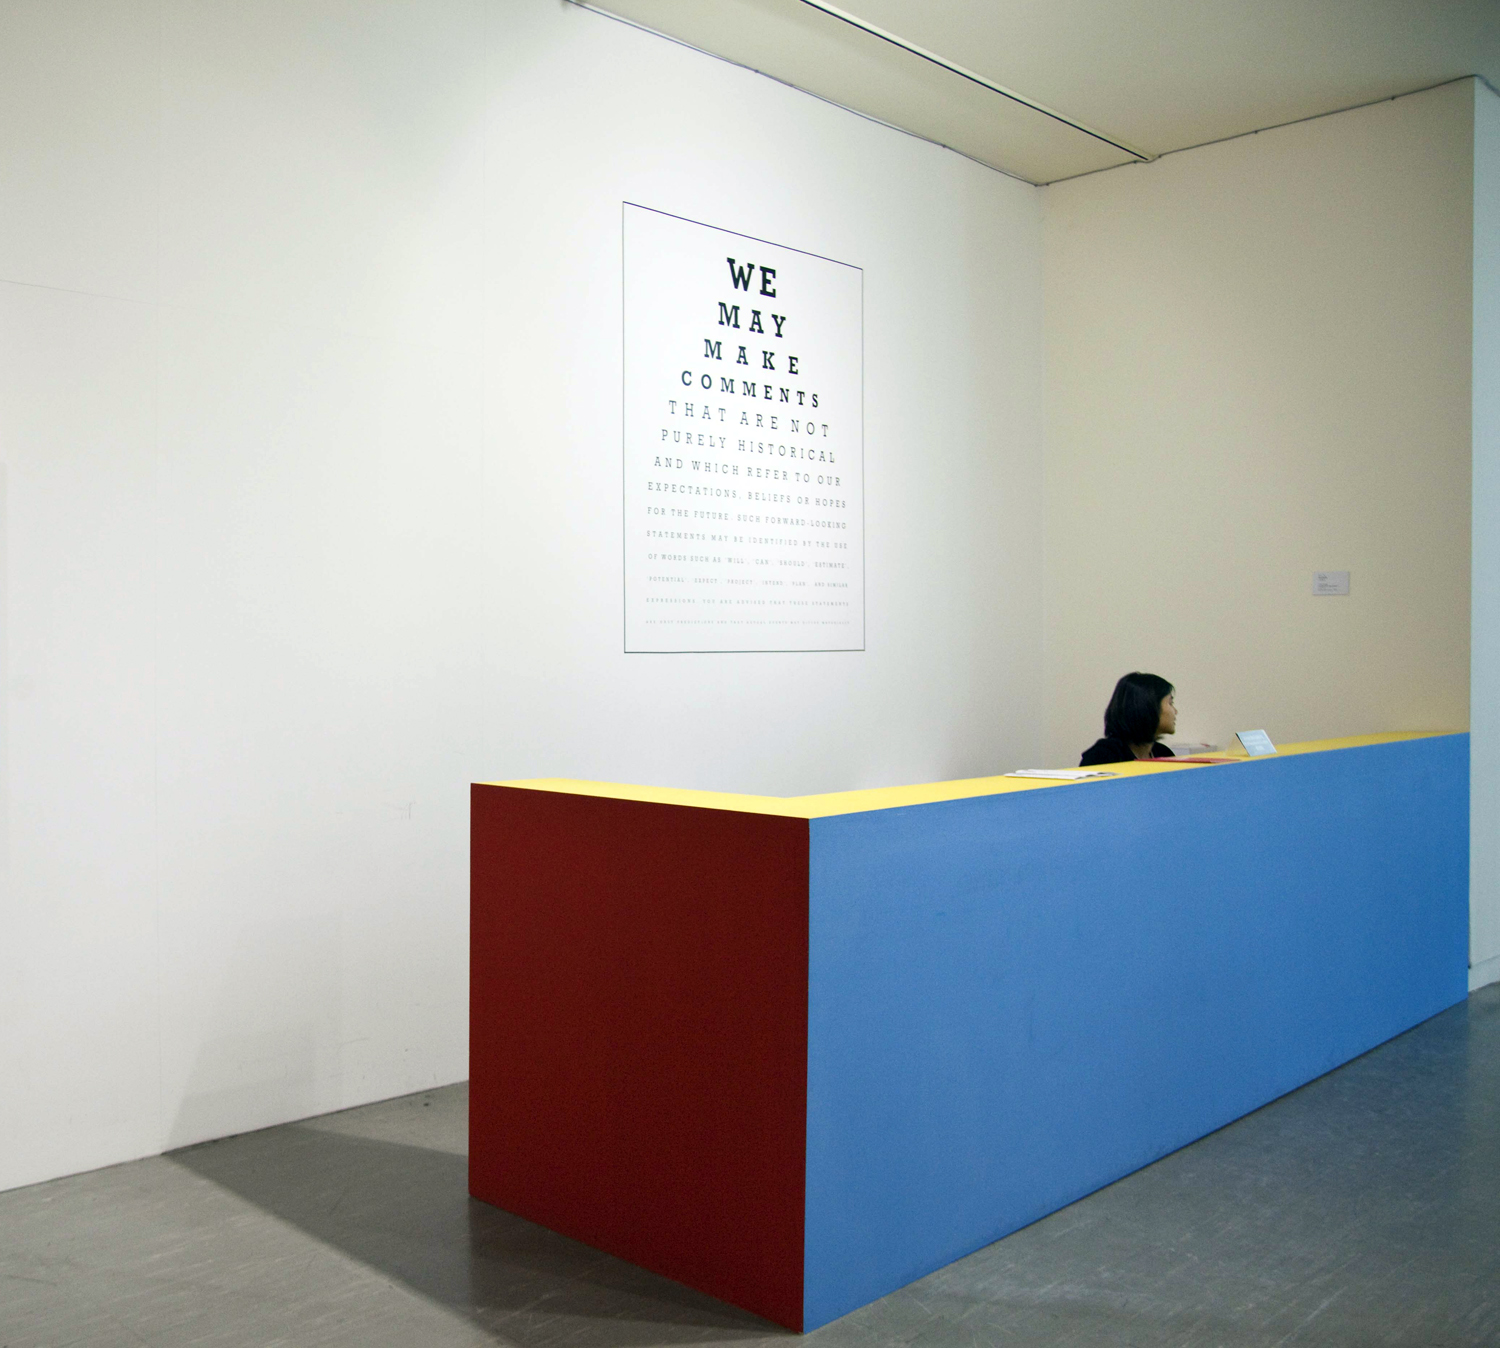   Cautionary Statement &nbsp;,&nbsp;Carey Young,&nbsp;2007,&nbsp;Vinyl text ,&nbsp;Dimensions variable.&nbsp;Installation view at Taipei Biennale, 2010. 